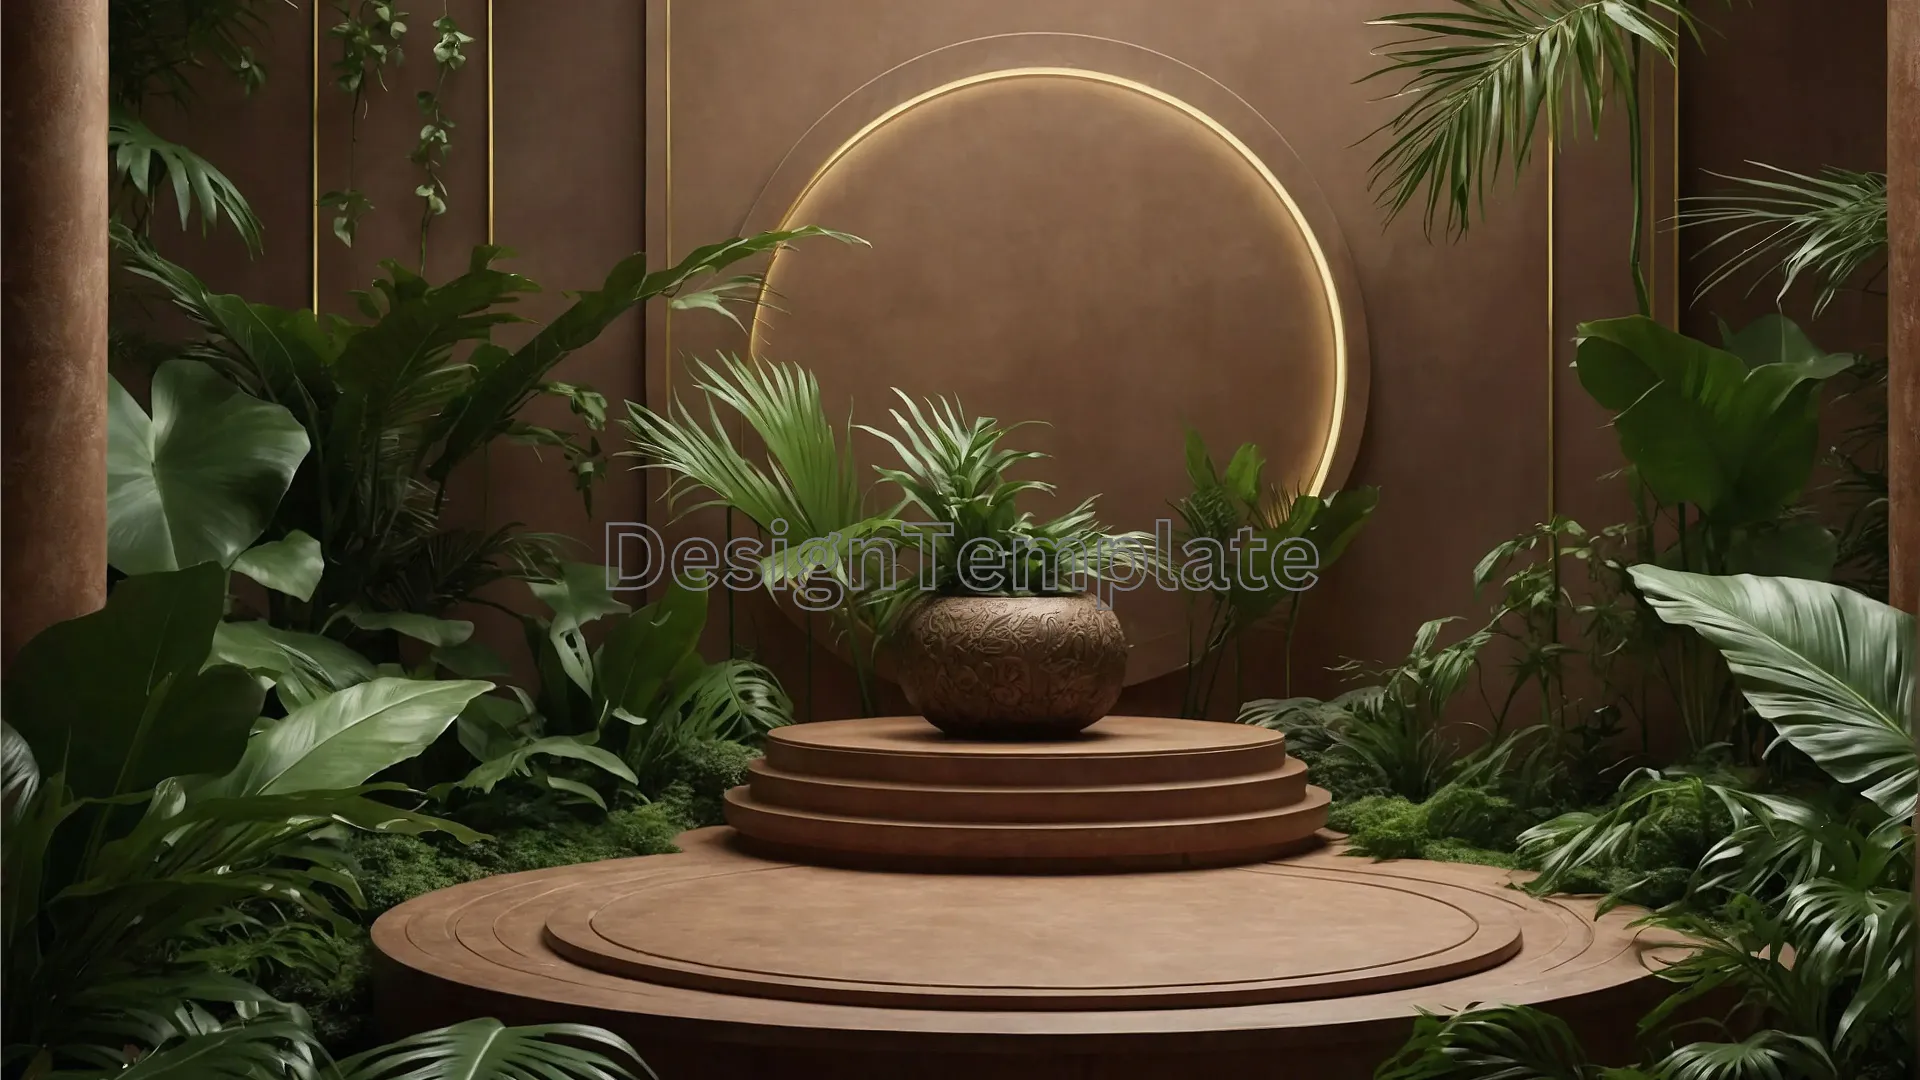 Lush Jungle Podium Texture Image